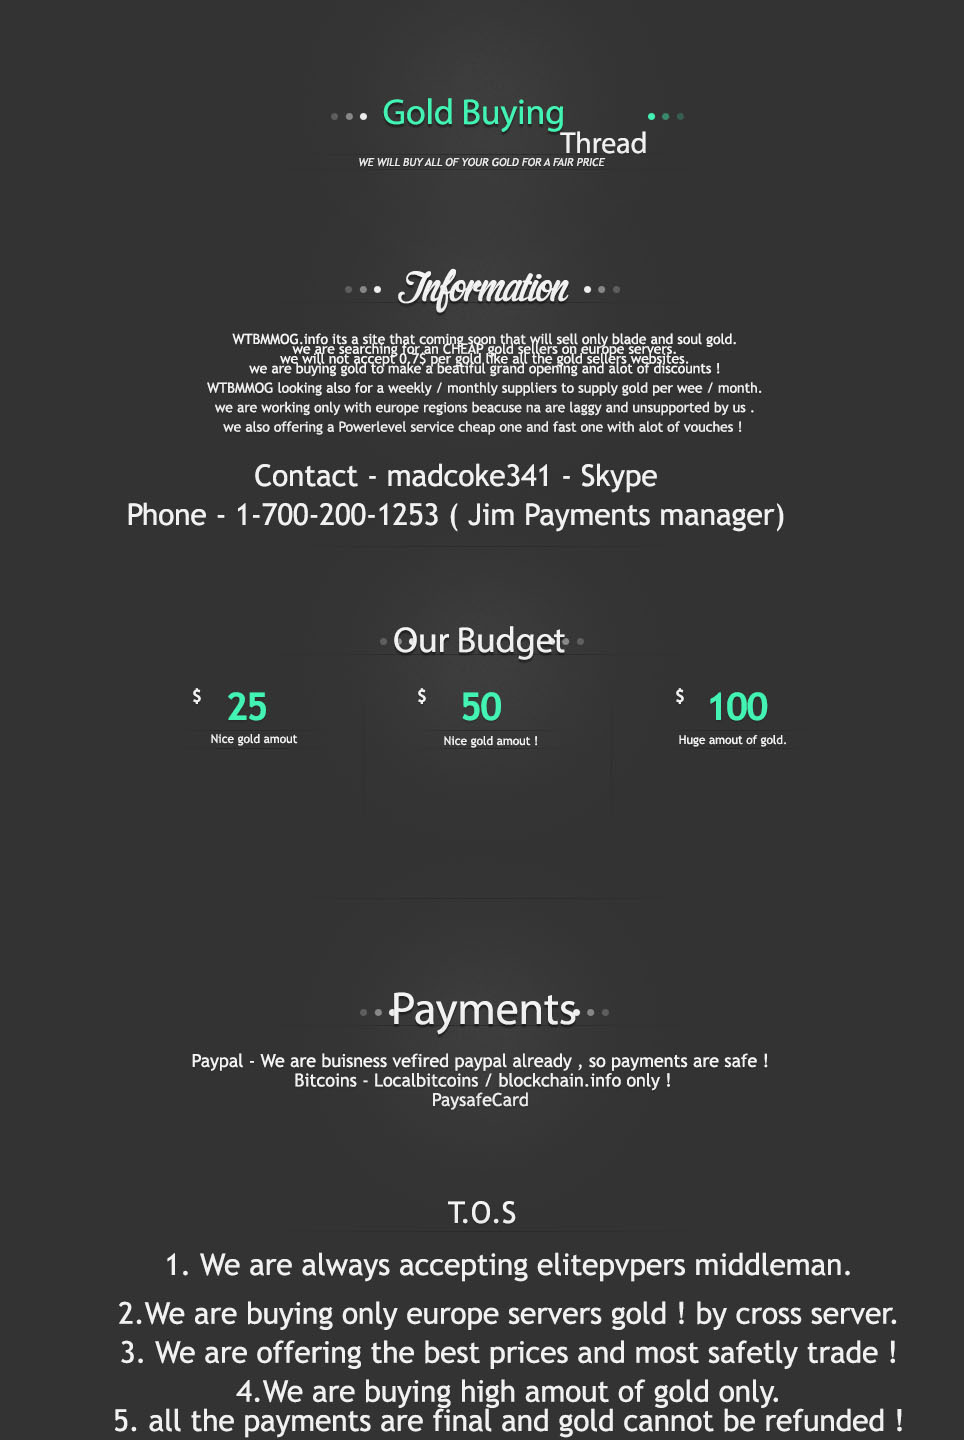 WTBMMOG.info - Buying Eu Servers Gold. Bitcoin / Paypal / PSC / New site coming soon-3sjomp9-jpg